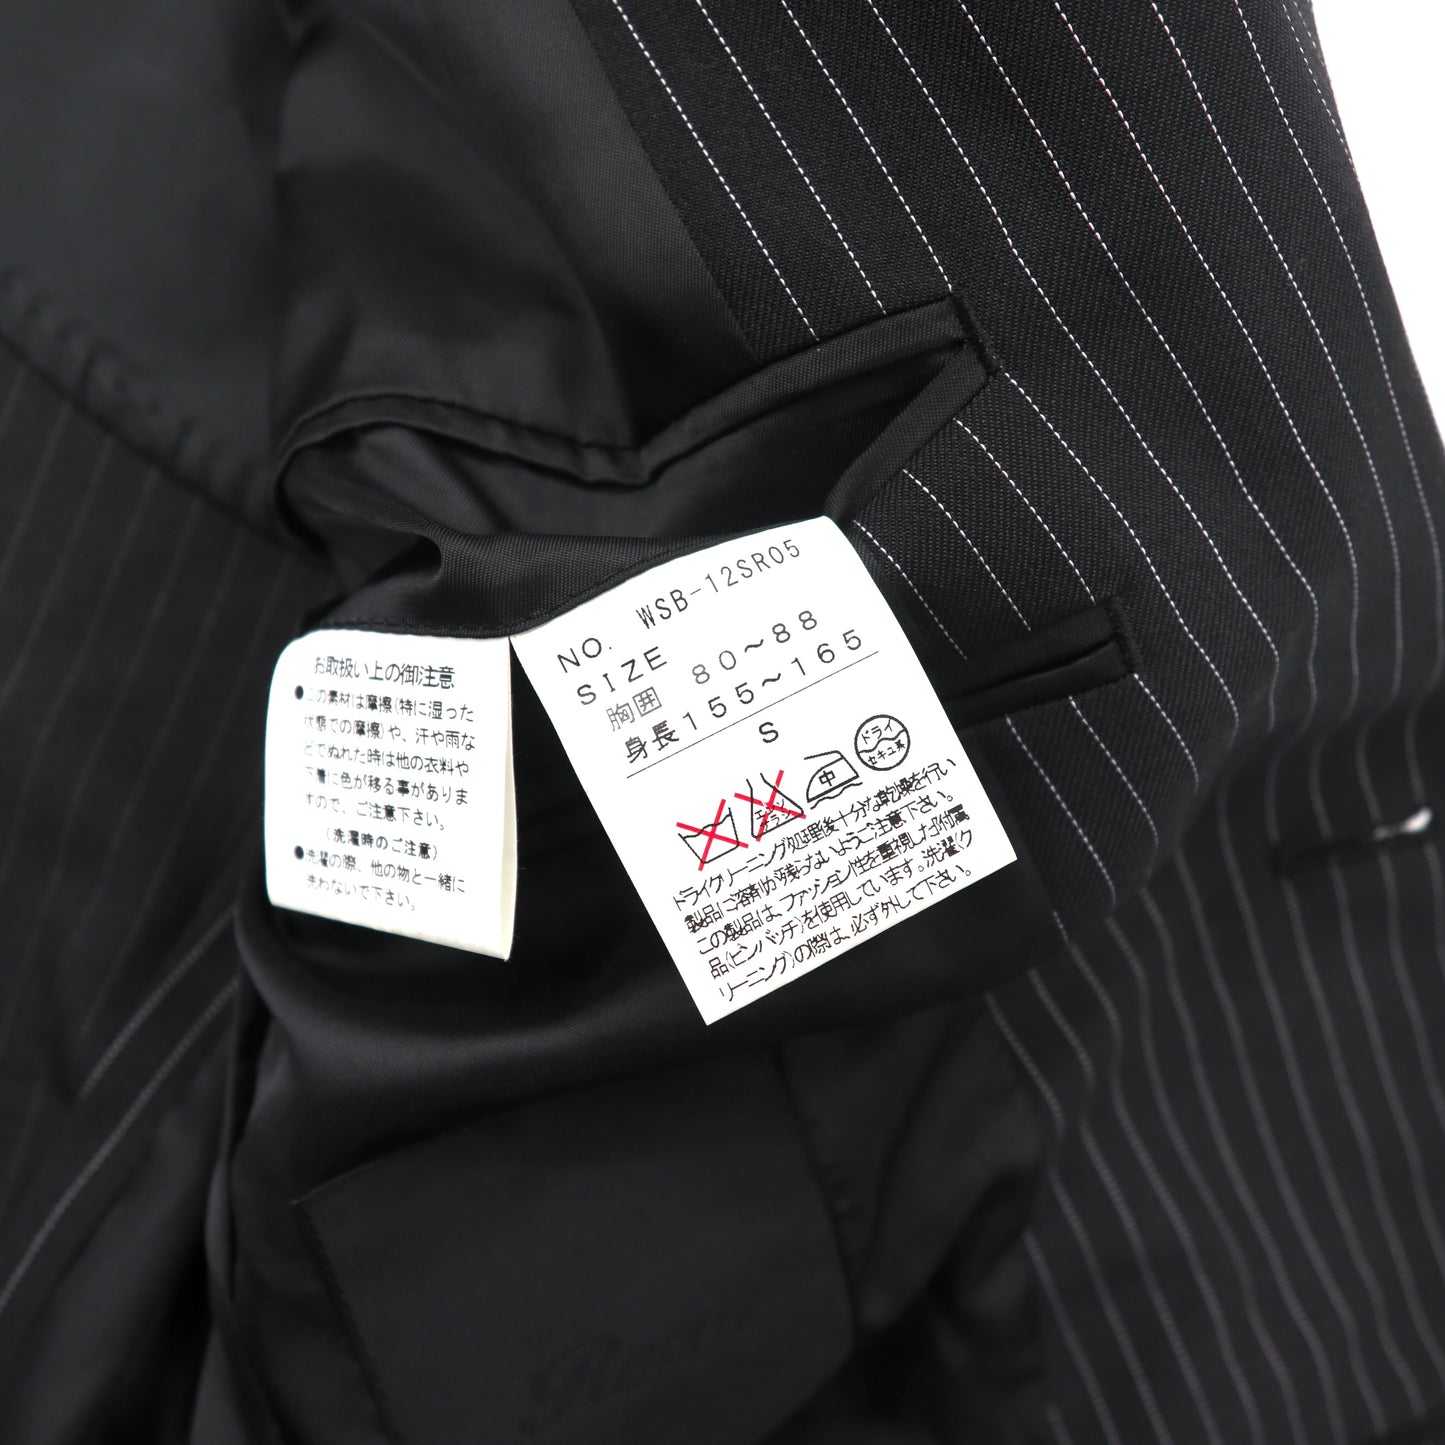 Roen x Semantic Design 2B Suit Setup S Black Striped Polyester